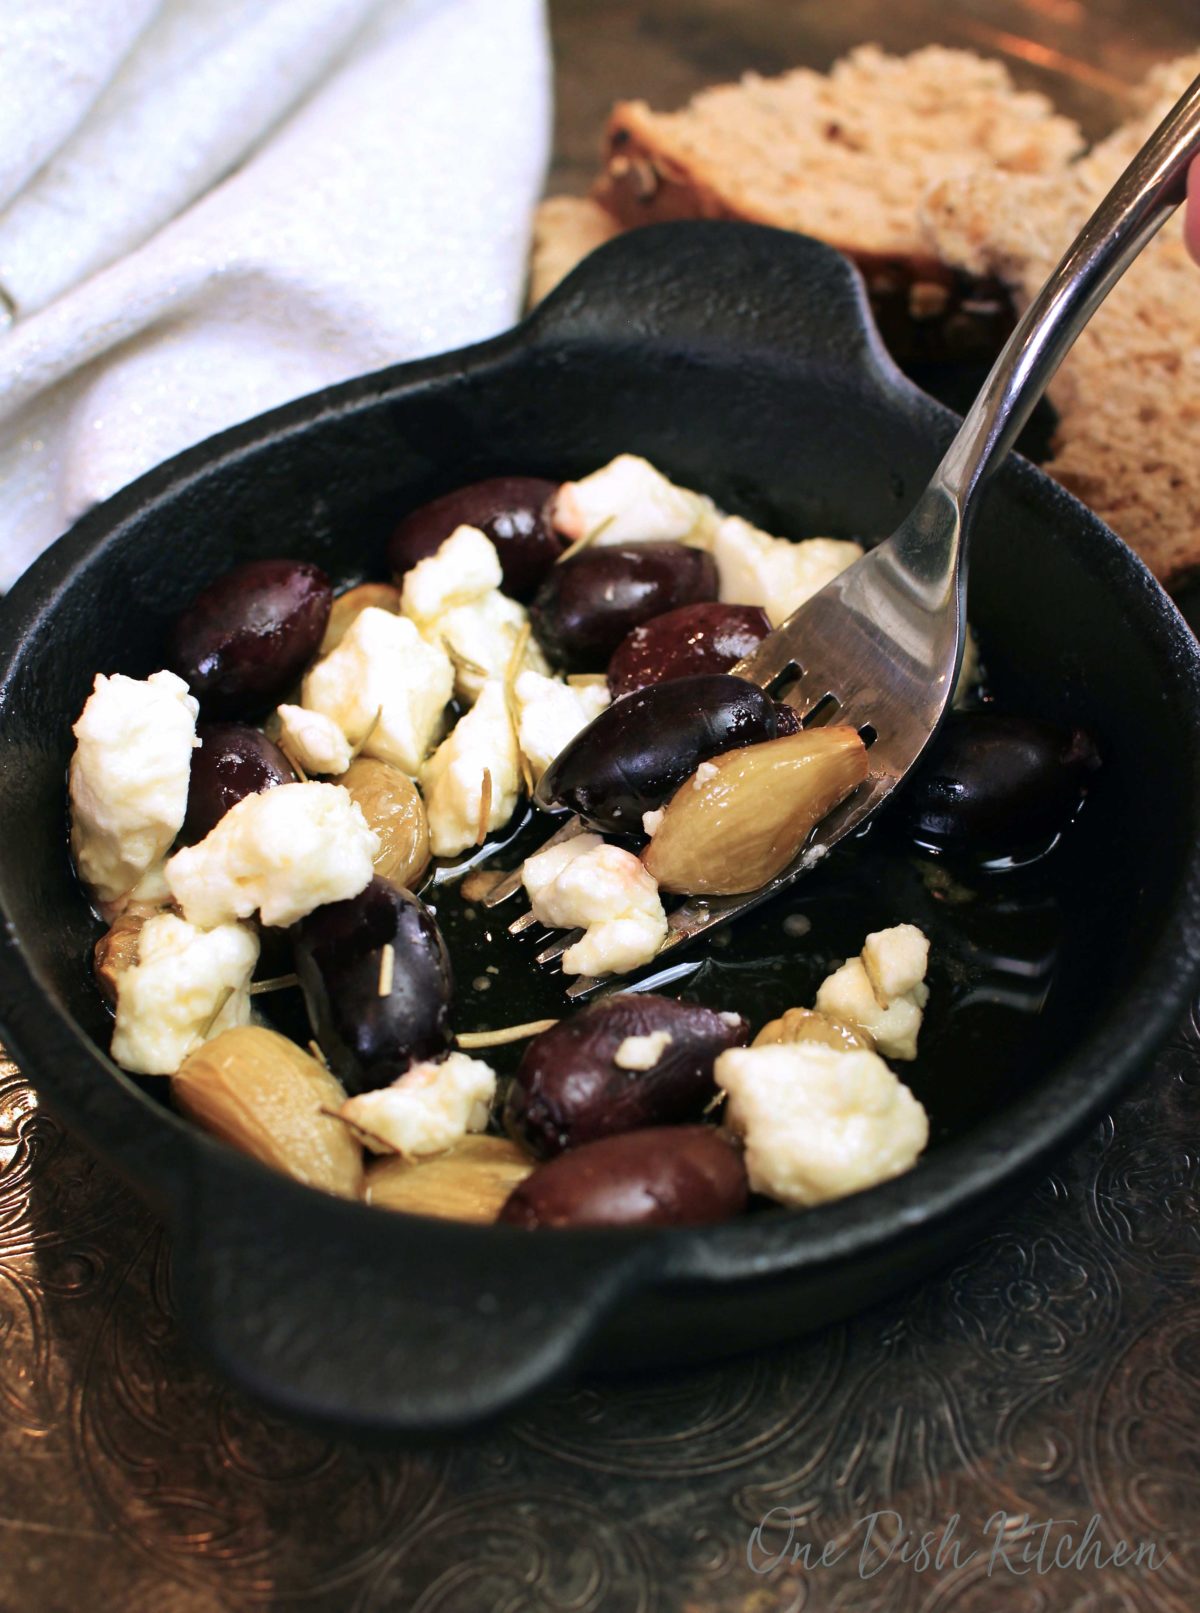 Stuffed Olives: Garlic to Feta - Recipes & Benefits Explored